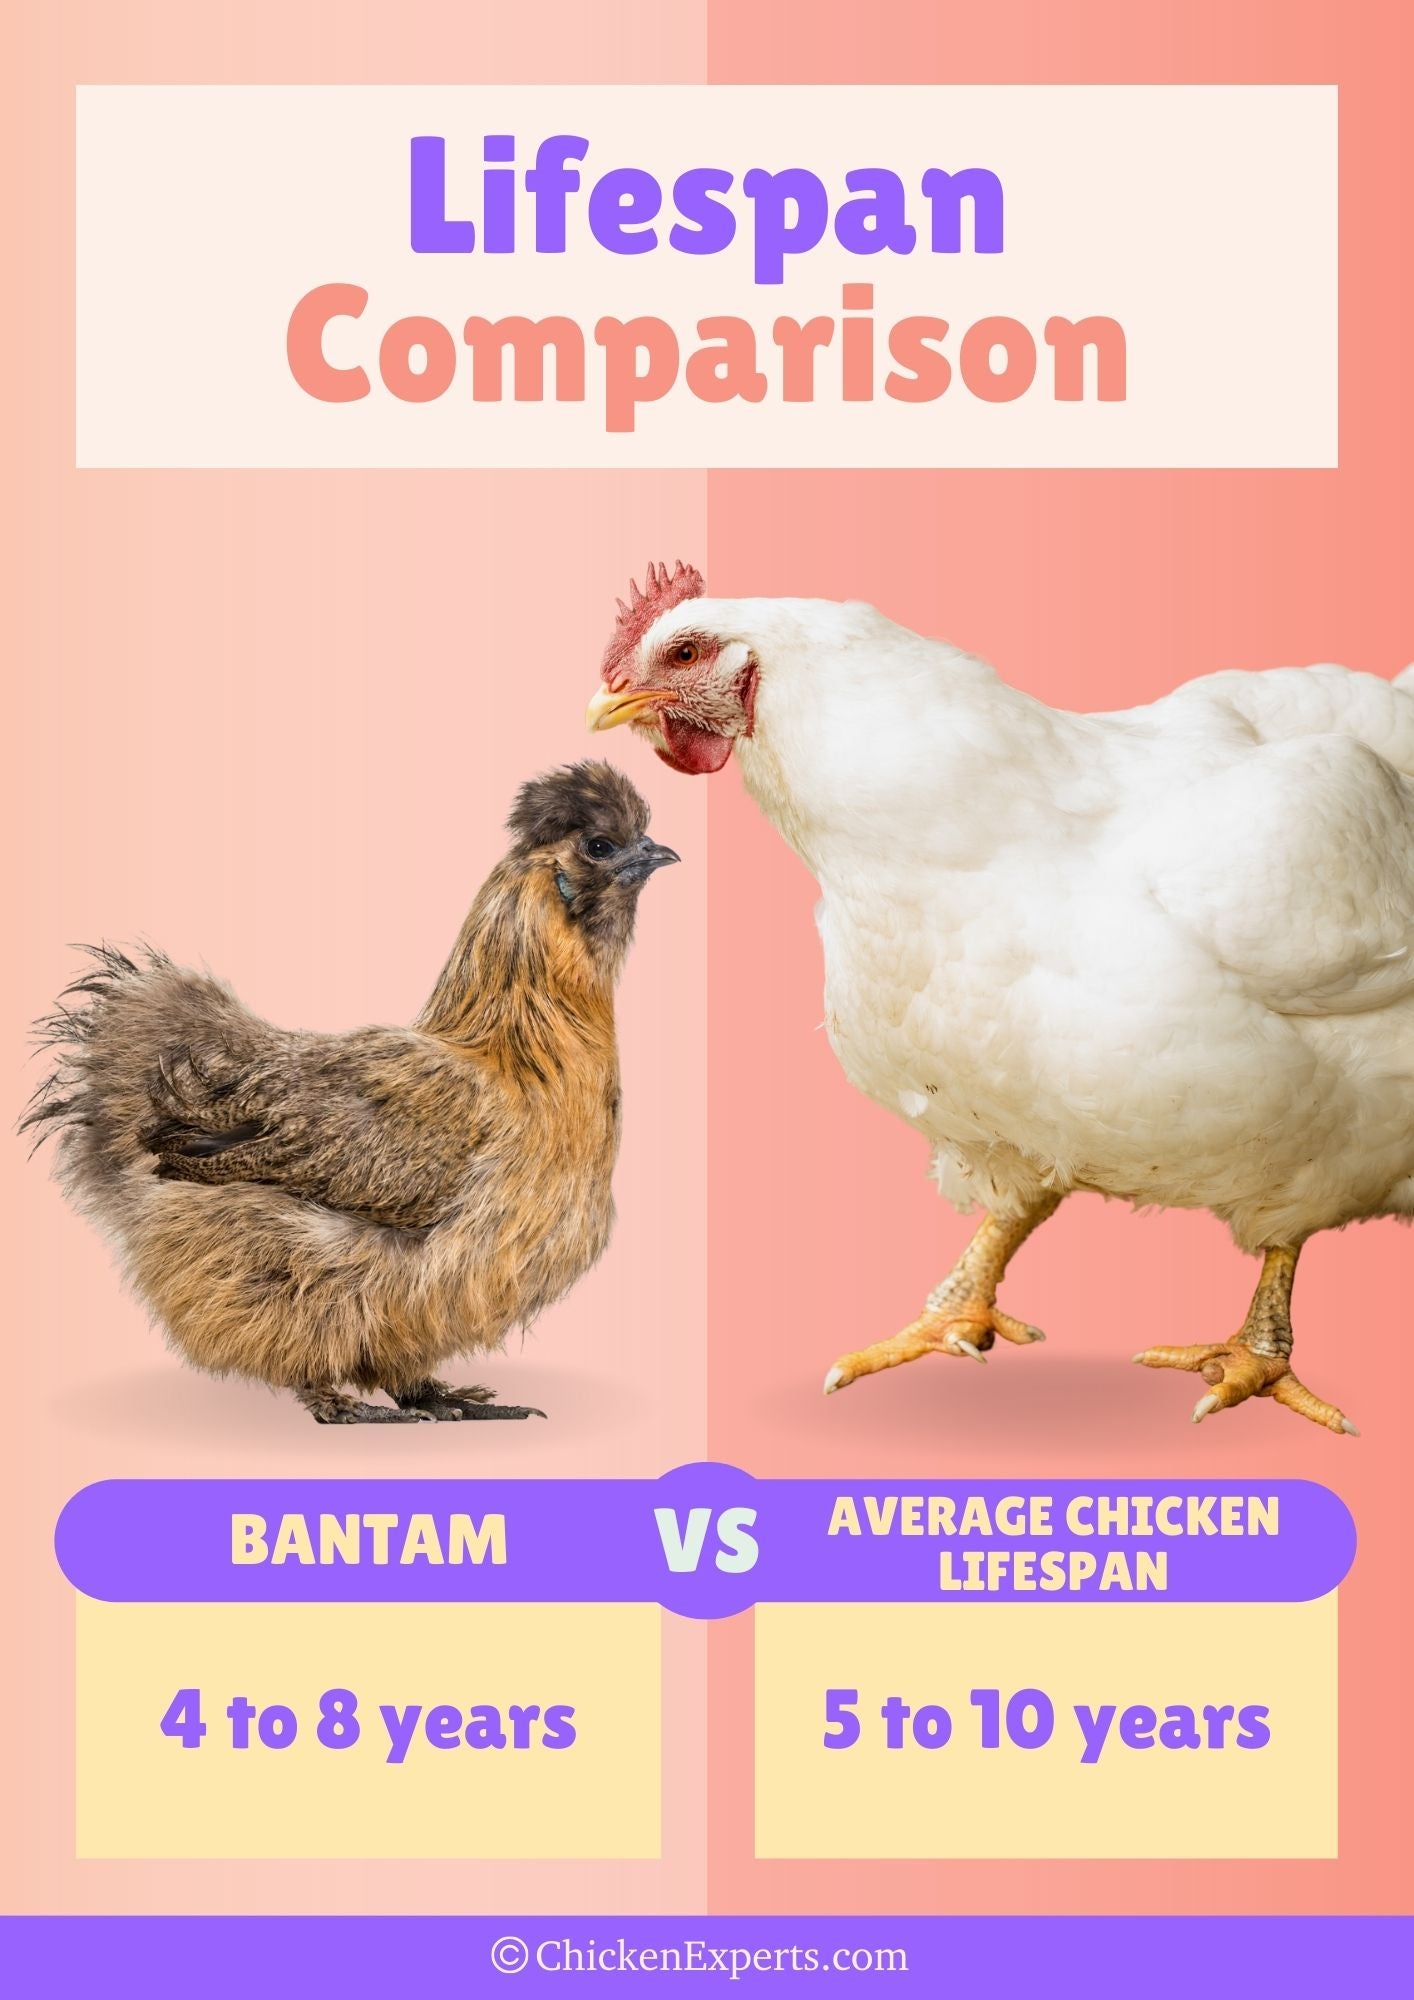 lifespan comparison of bantam chickens